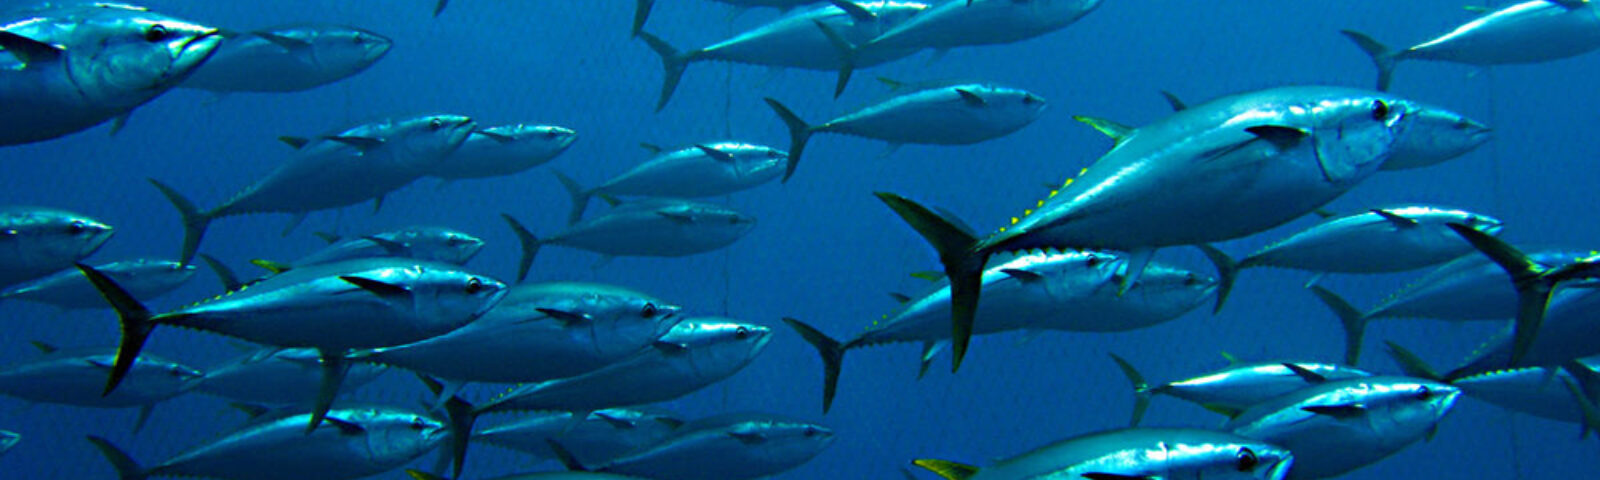 Yellowfin tuna svømmer i vann